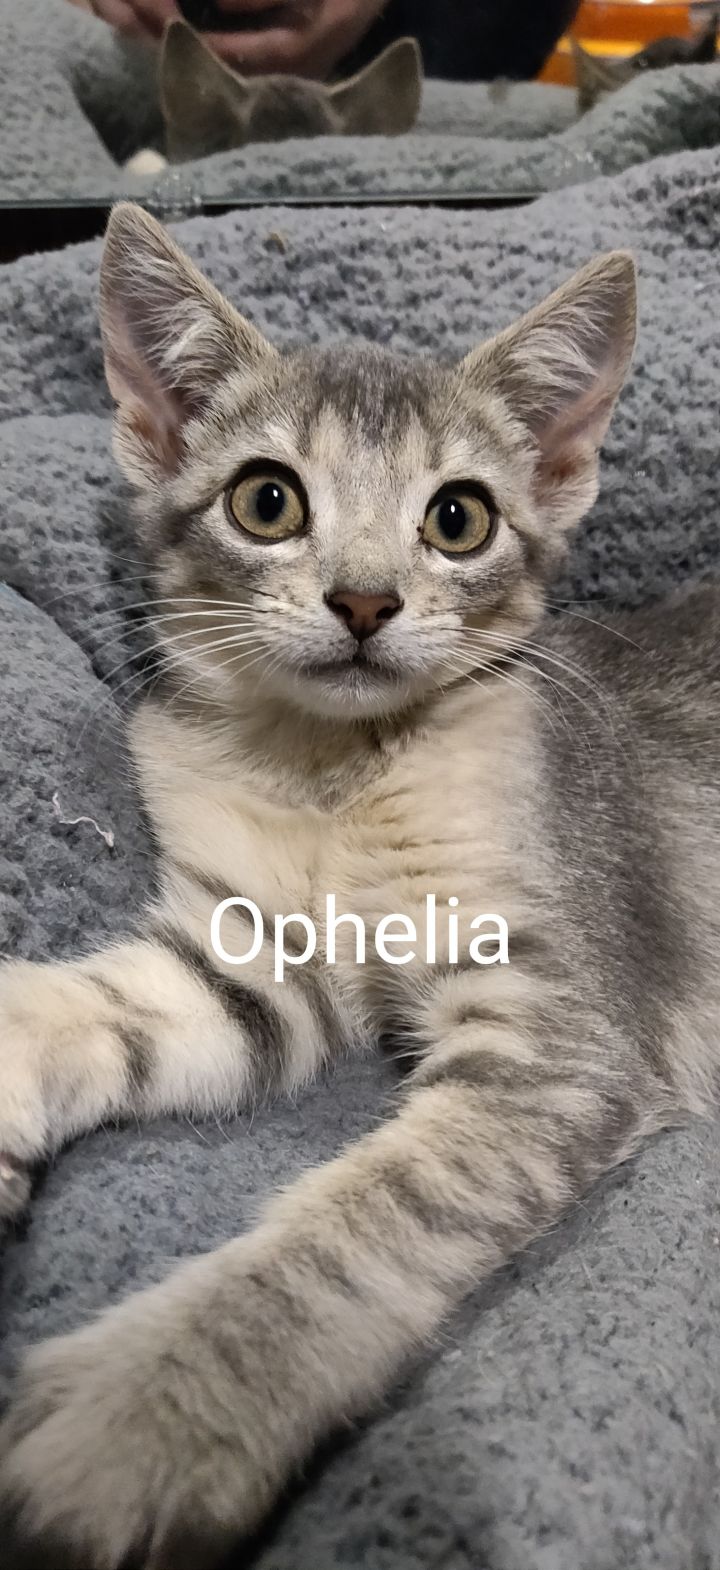 Ophelia (Group kittens) 1